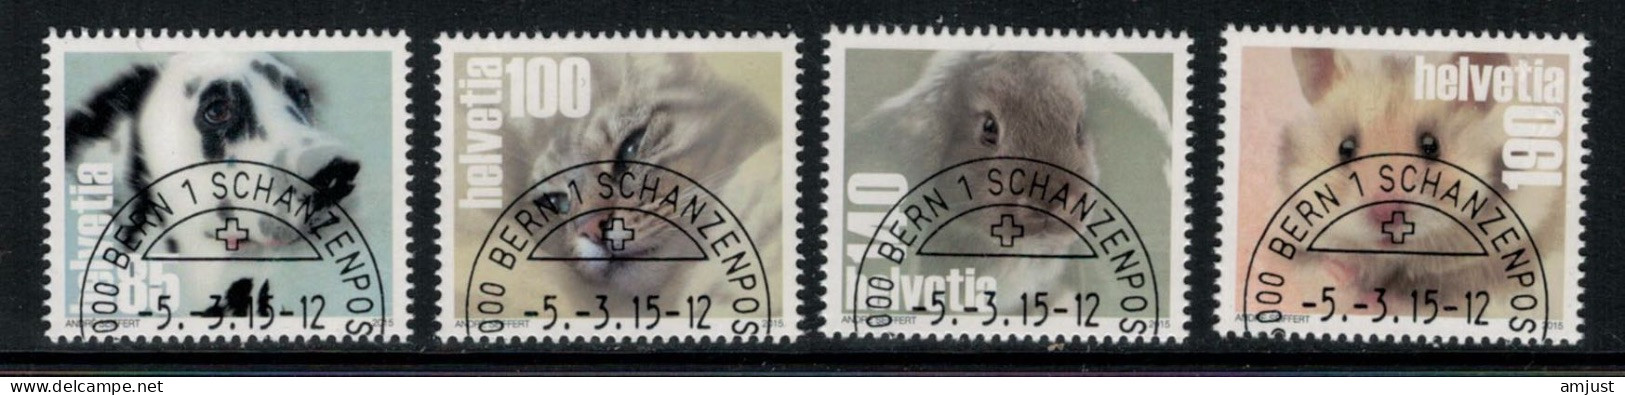 Suisse // Schweiz // Switzerland // 2010-2017 // 2015 // Animaux Domestiques No. 1536-1539 - Used Stamps